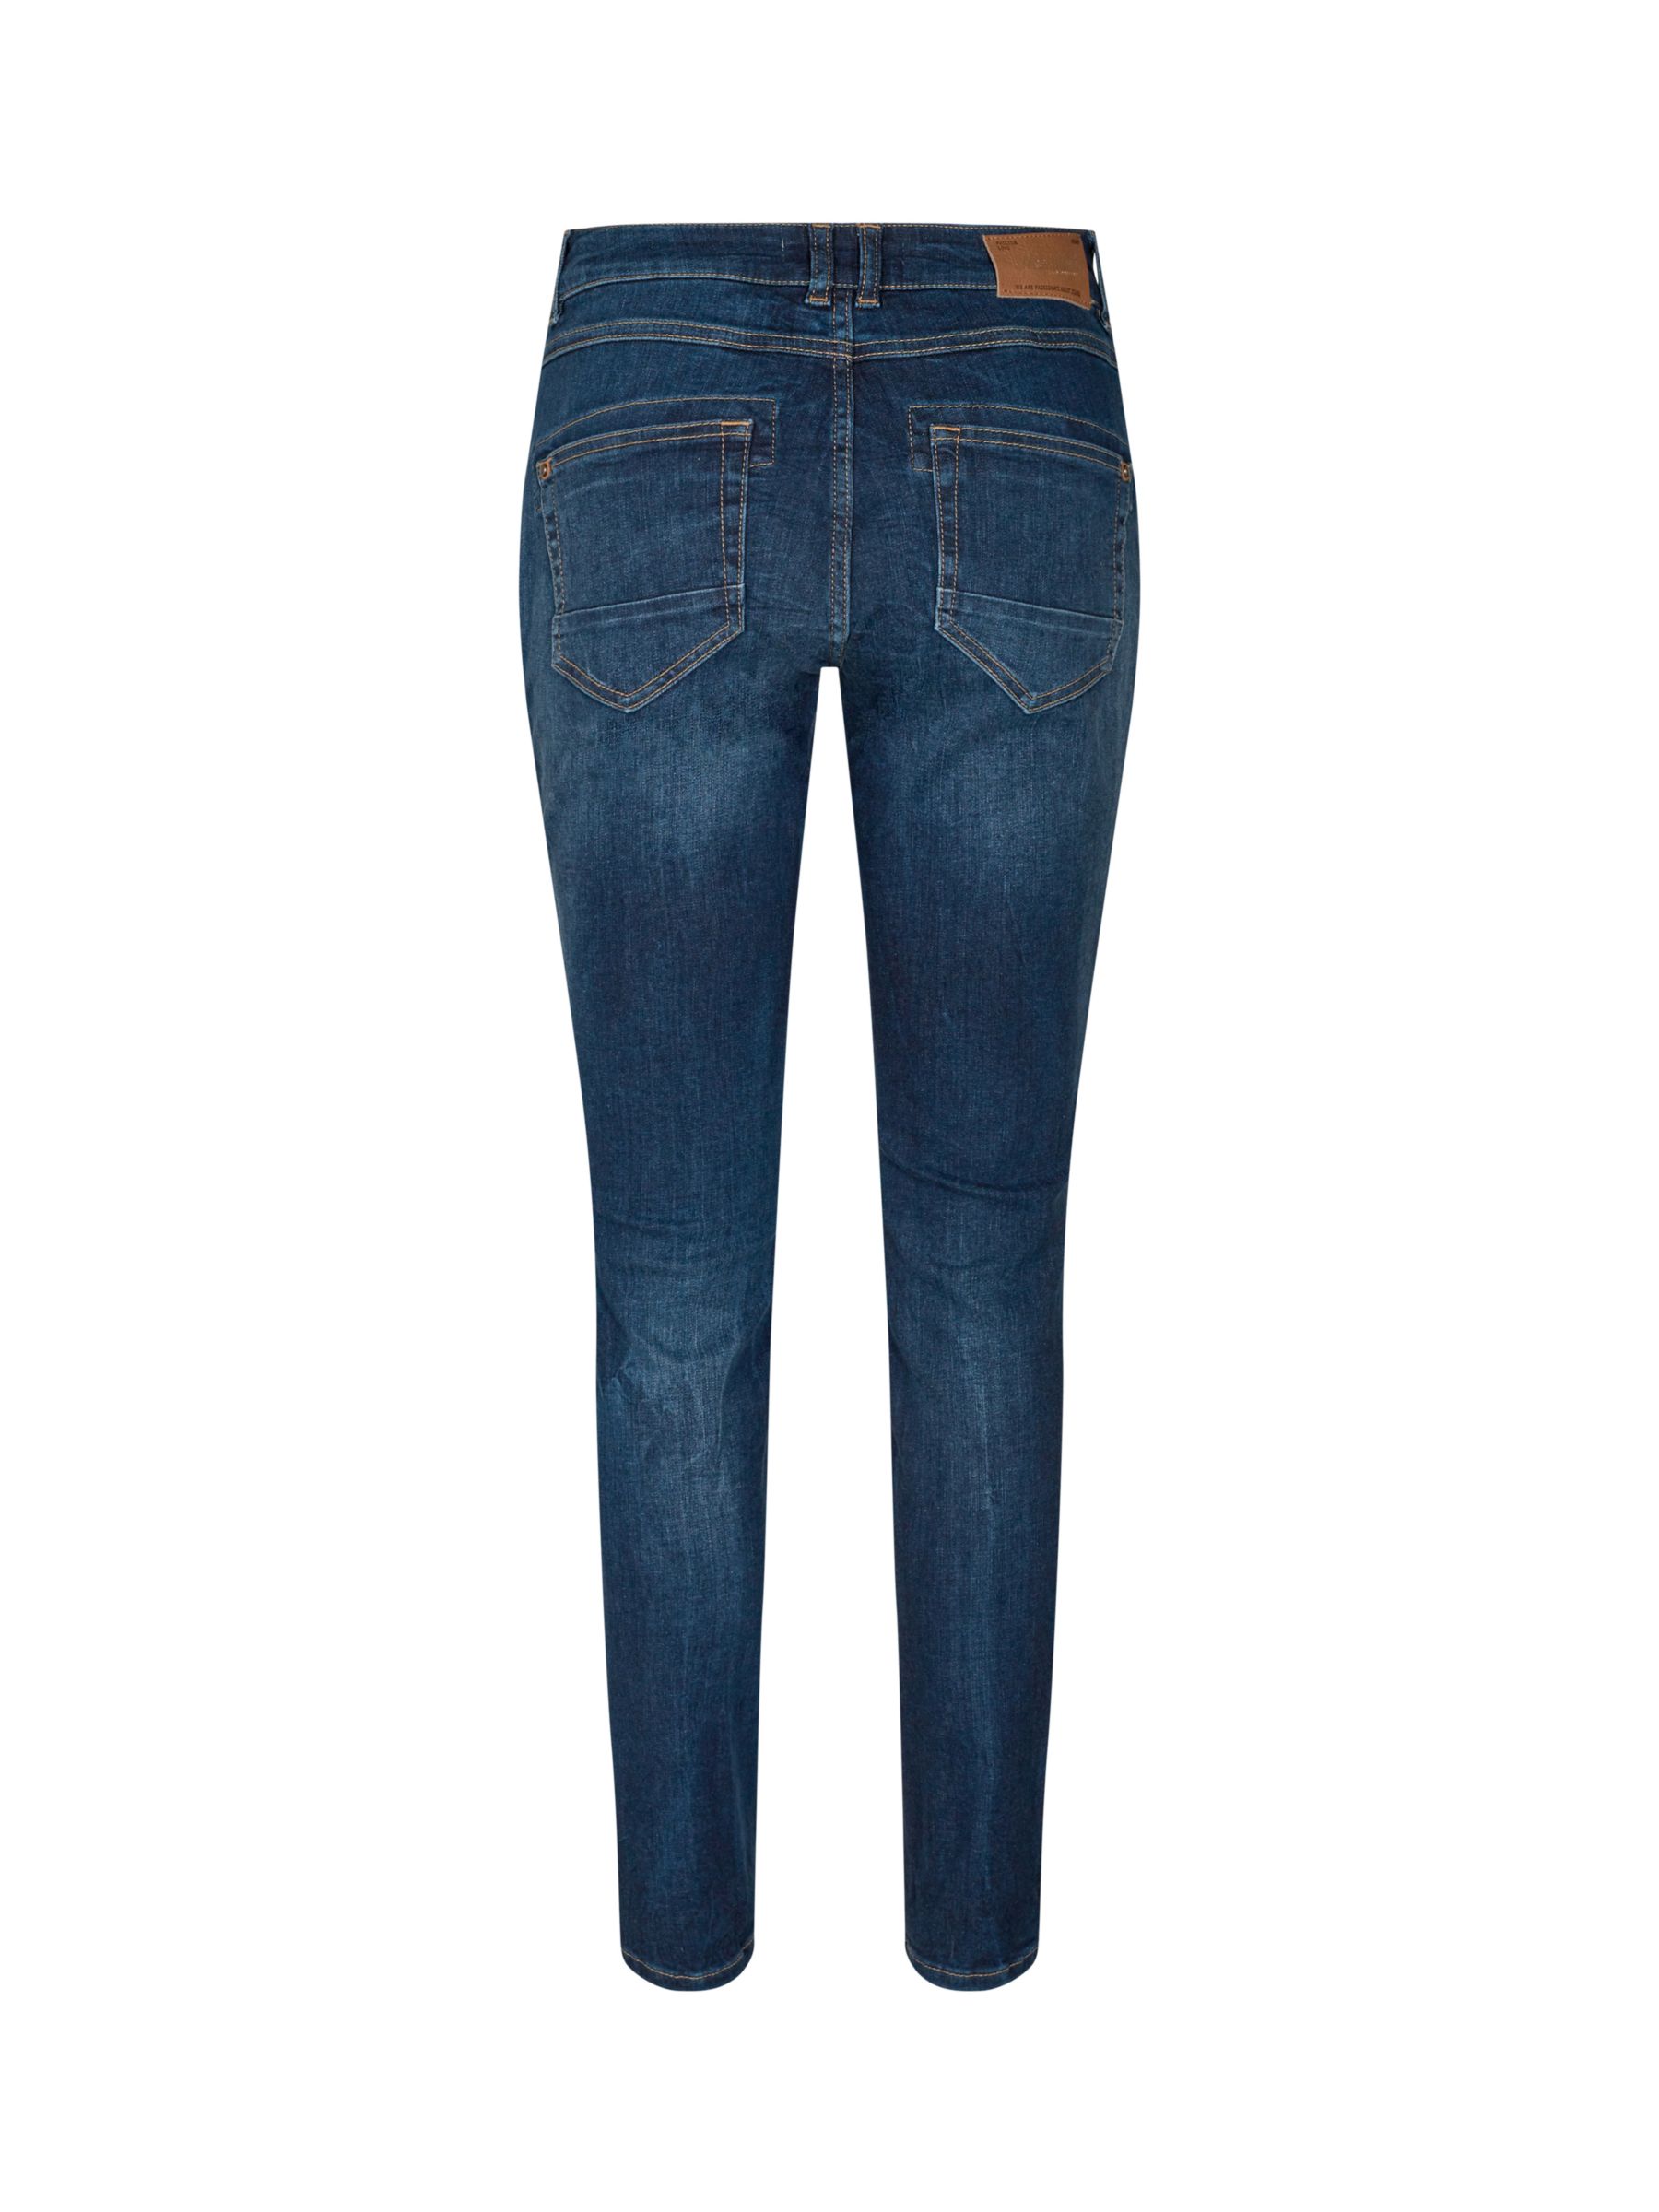 MOS MOSH Naomi Pocket Detail Jeans, Blue at John Lewis & Partners